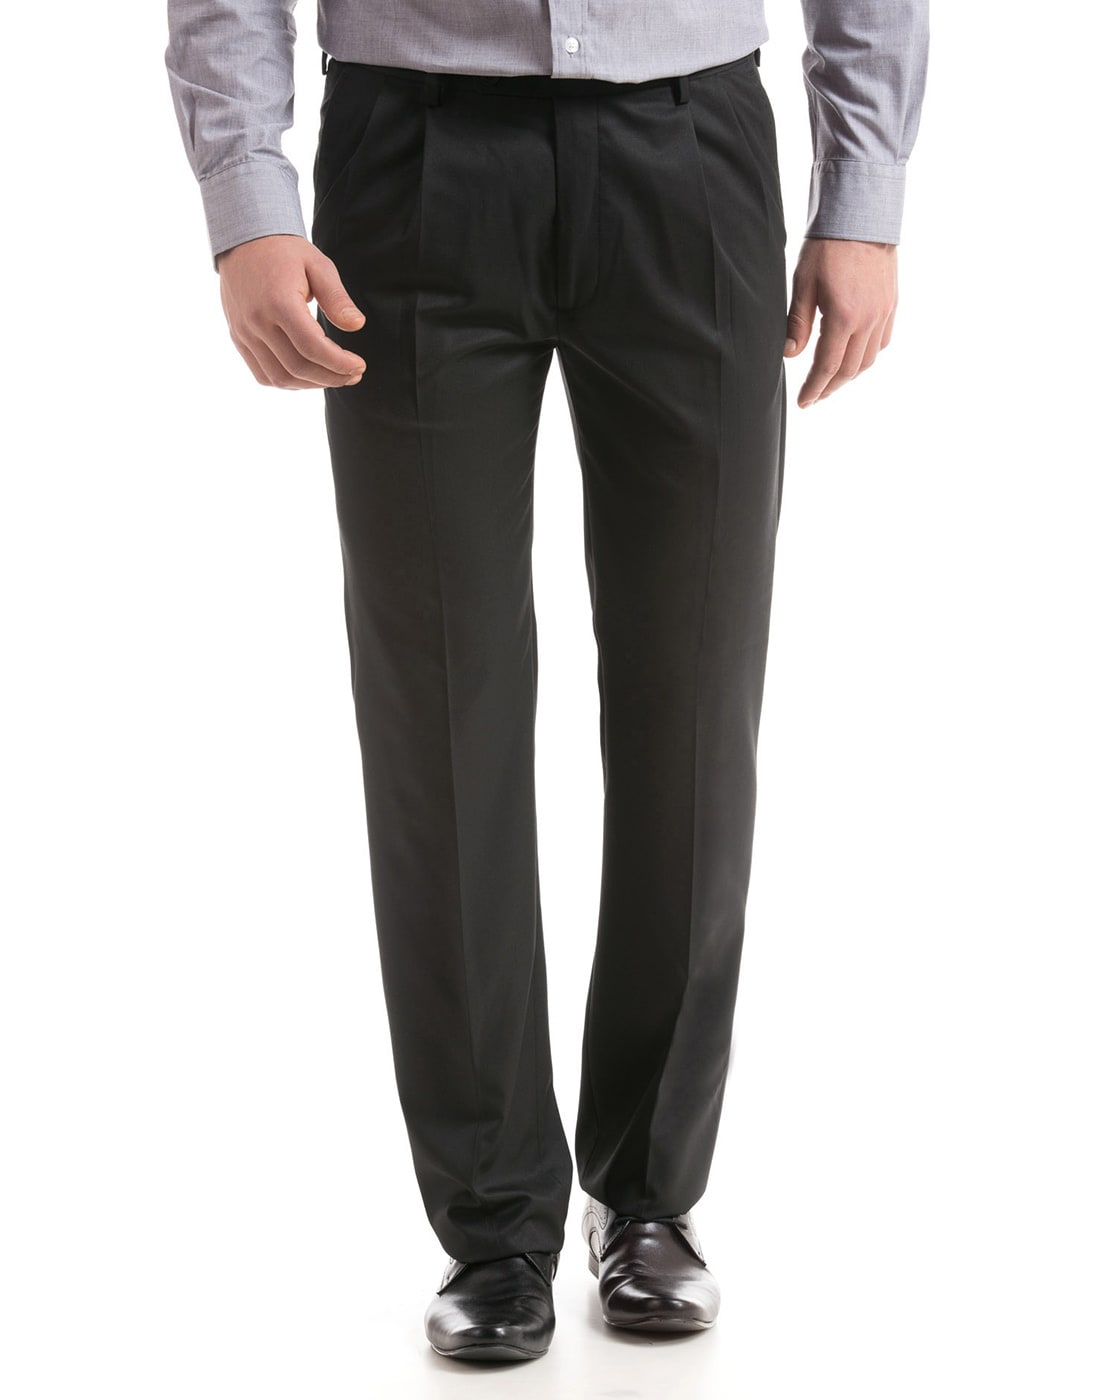 Buy Navy Trousers & Pants for Men by LP-Y Online | Ajio.com